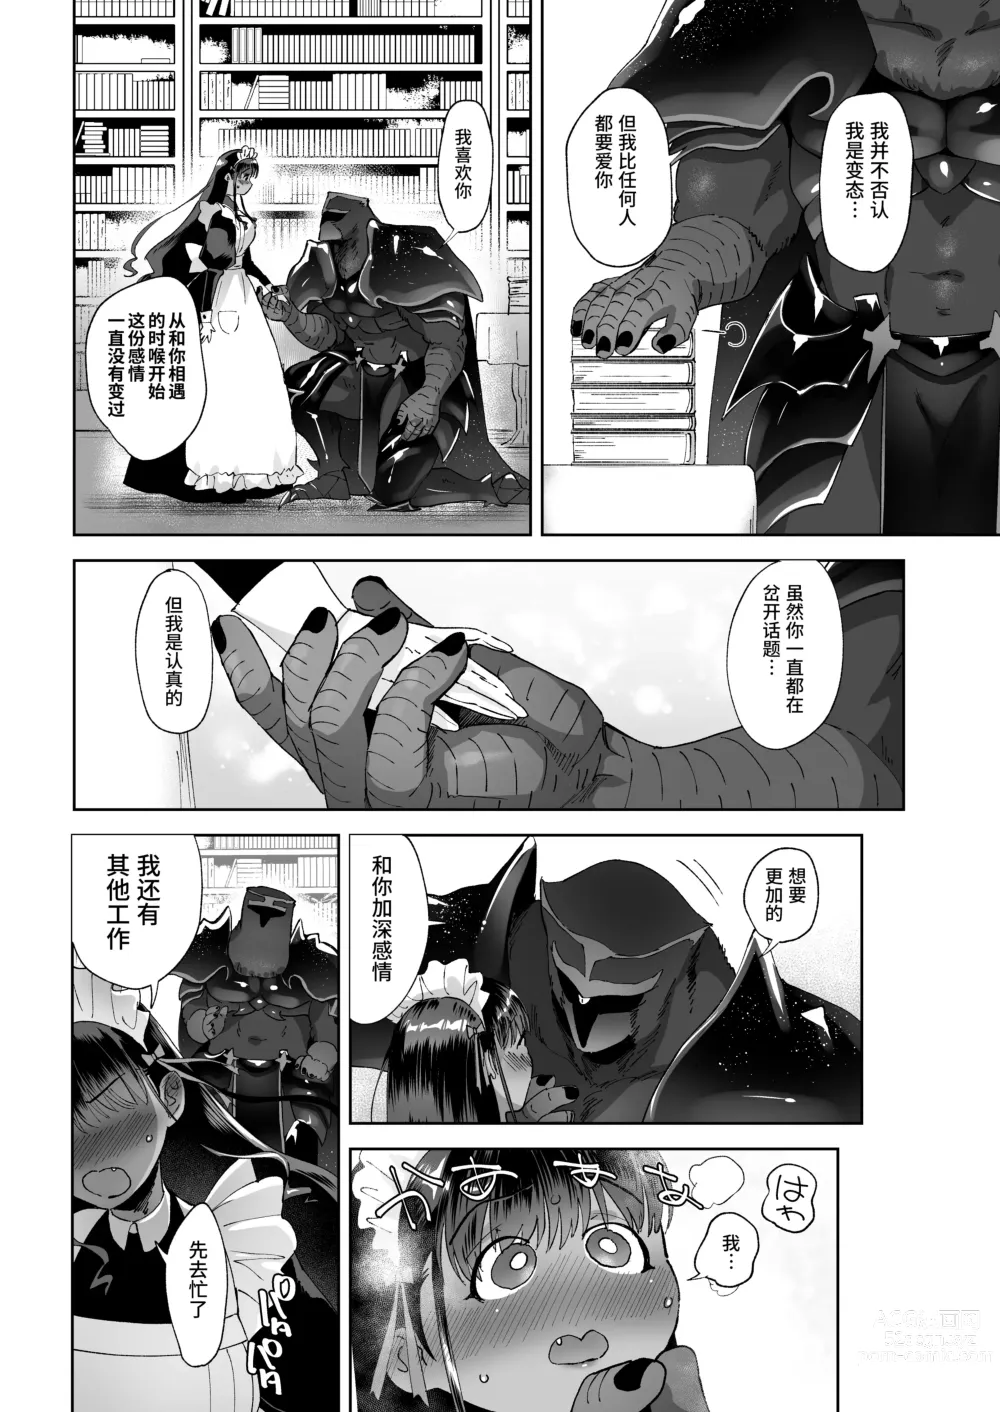 Page 4 of manga 亲吻绝对不行哦?